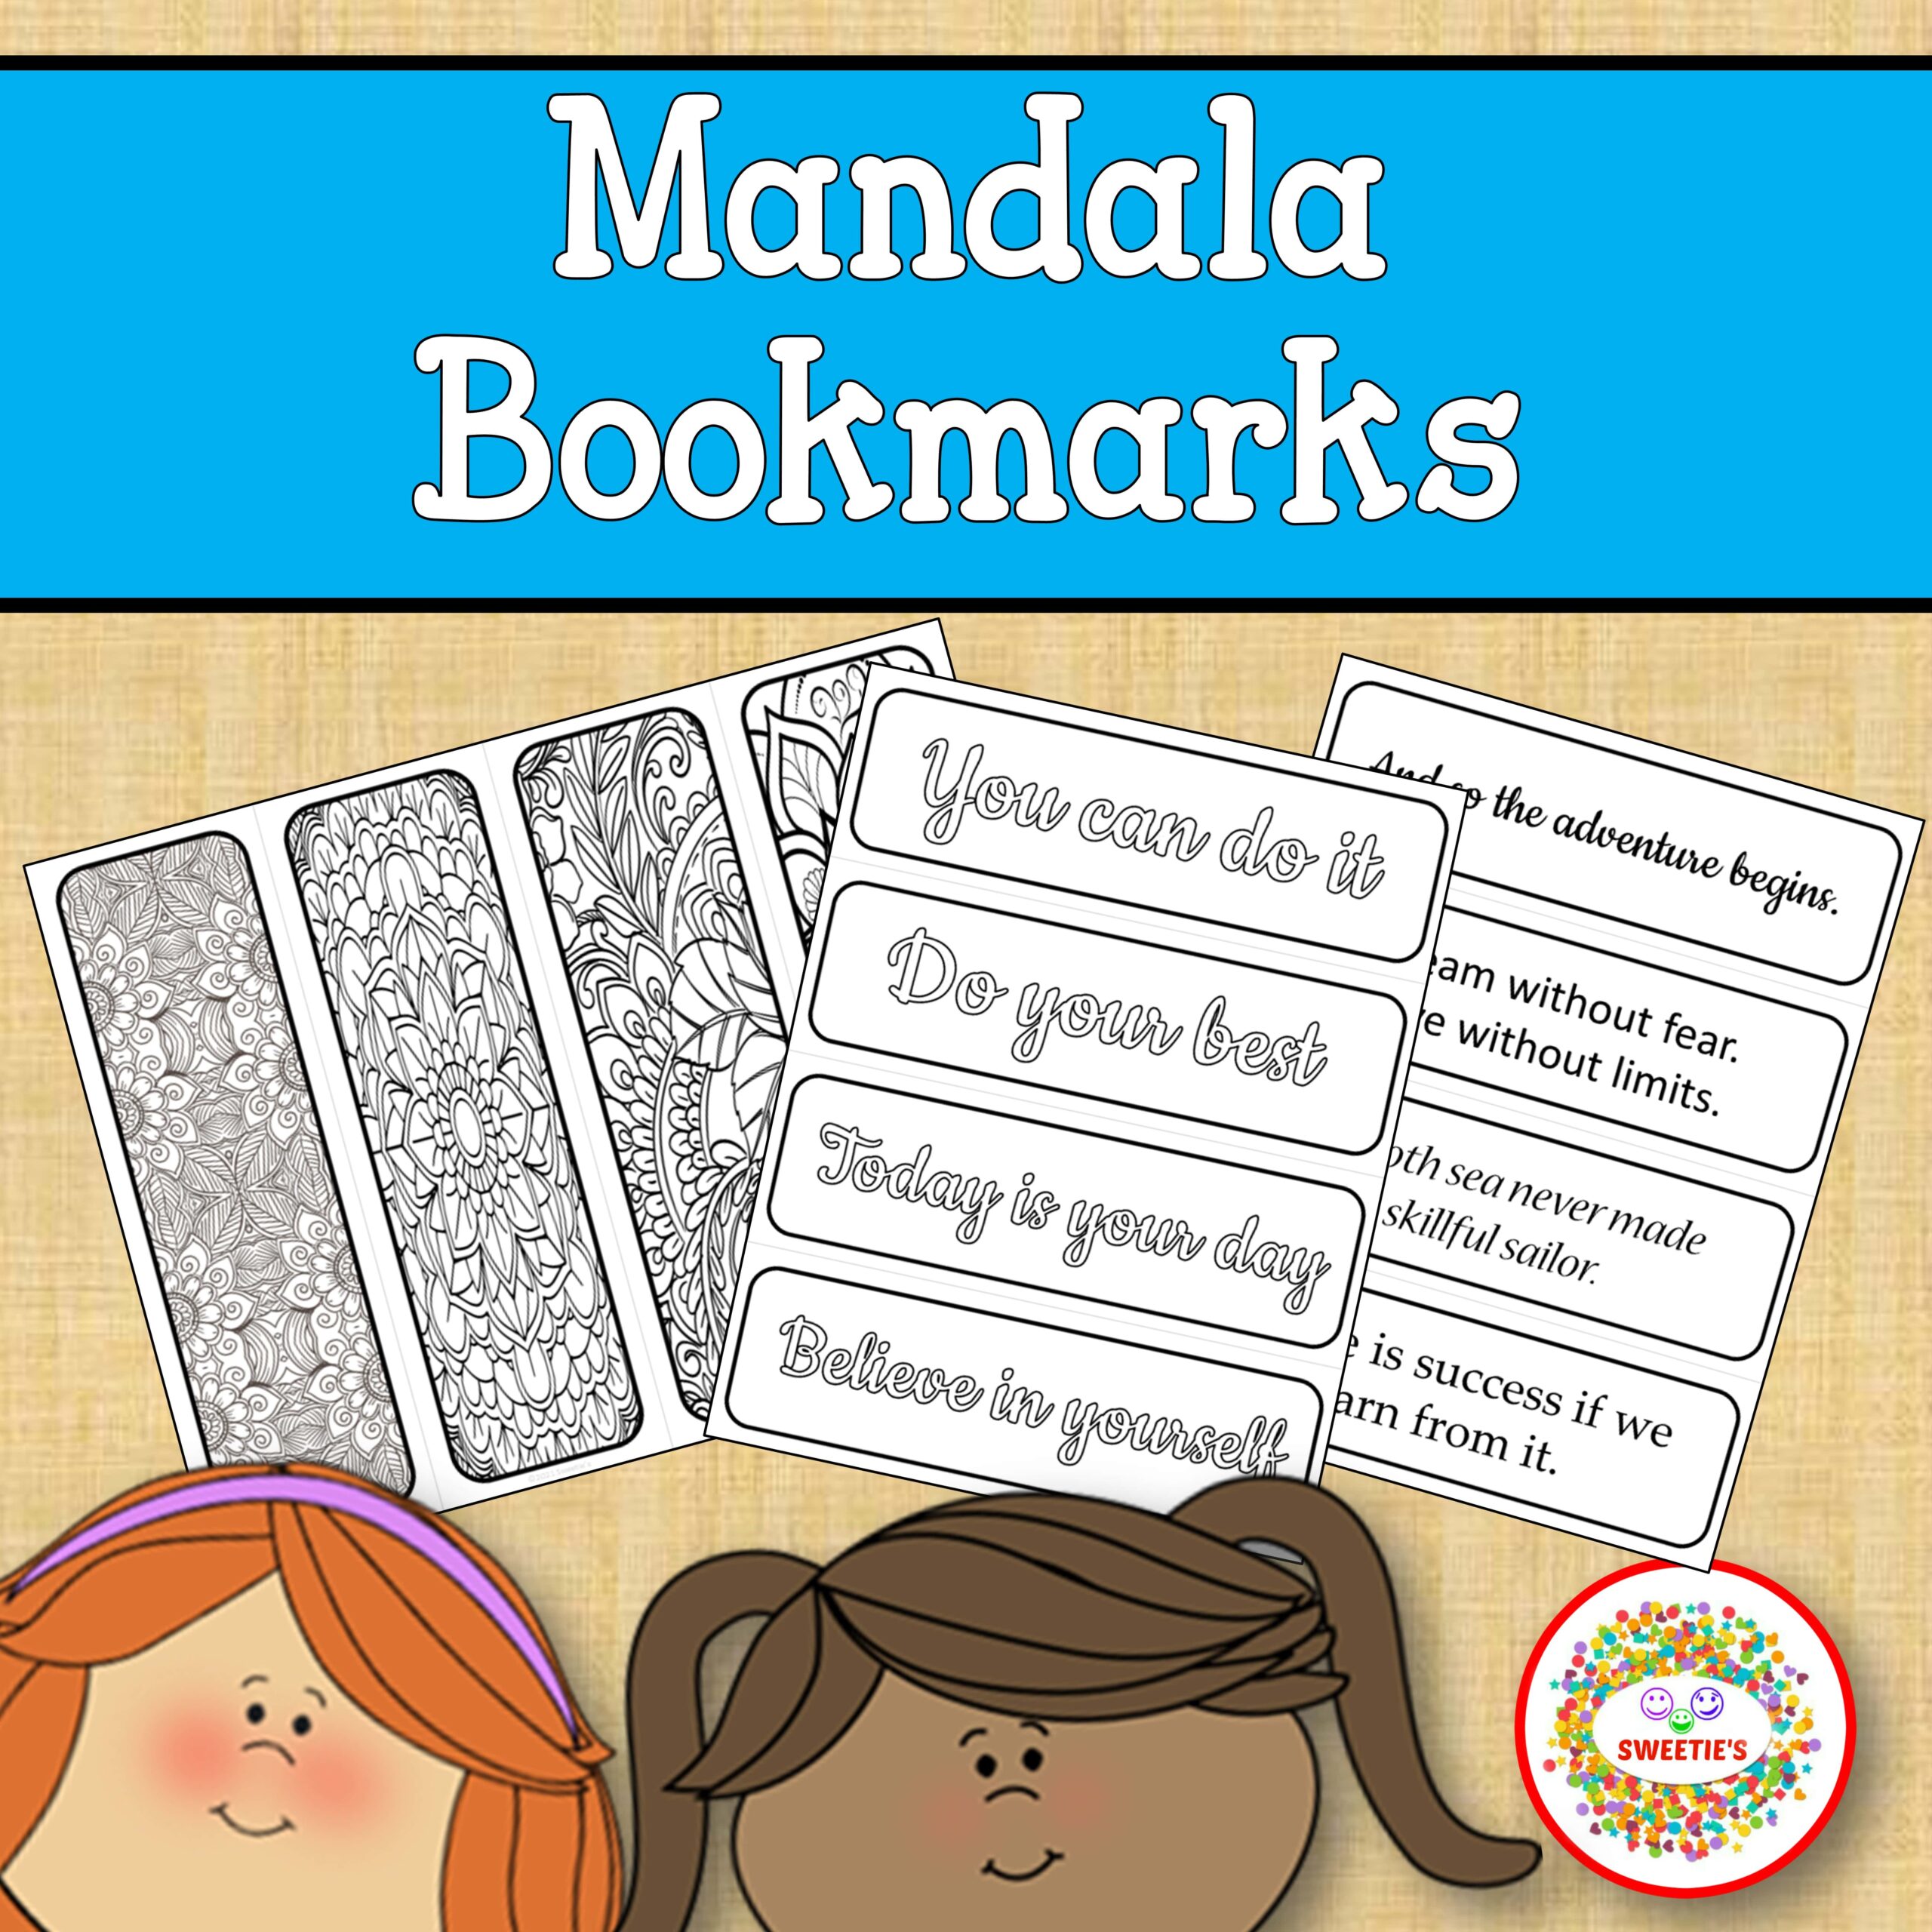 Mandala Bookmarks Inspirational Quotes